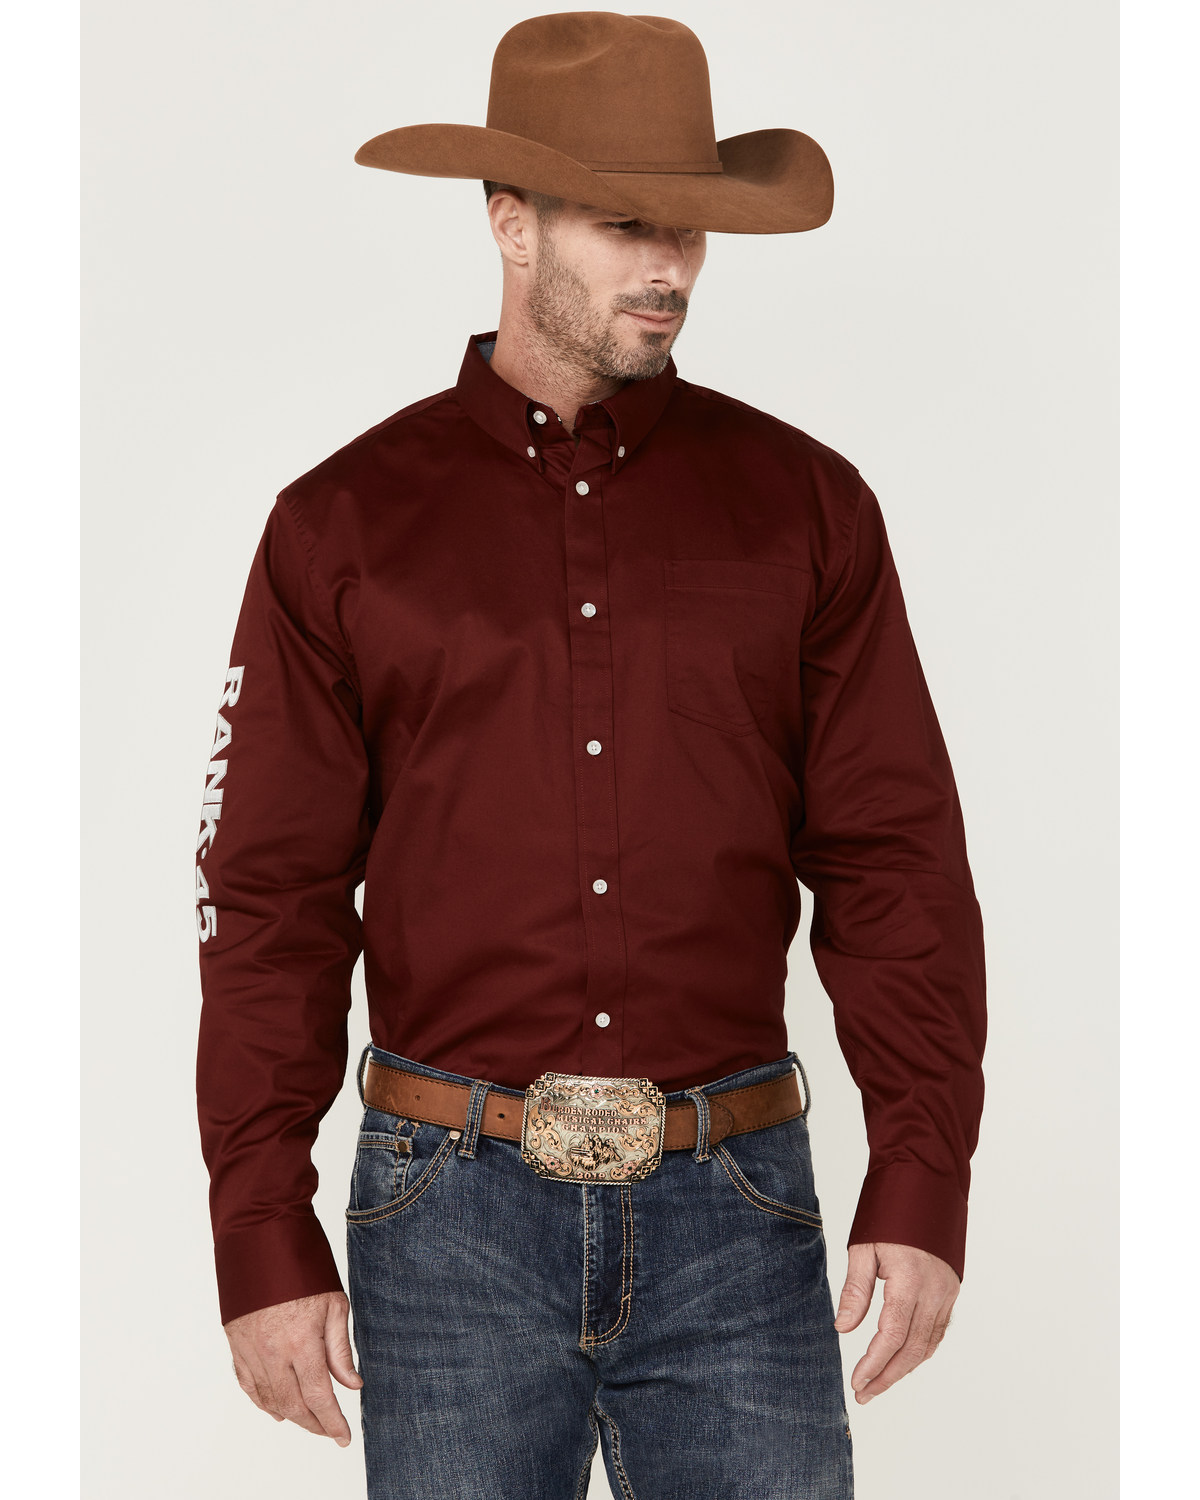 RANK 45® Men's Performance Twill Logo Long Sleeve Button-Down Western Shirt